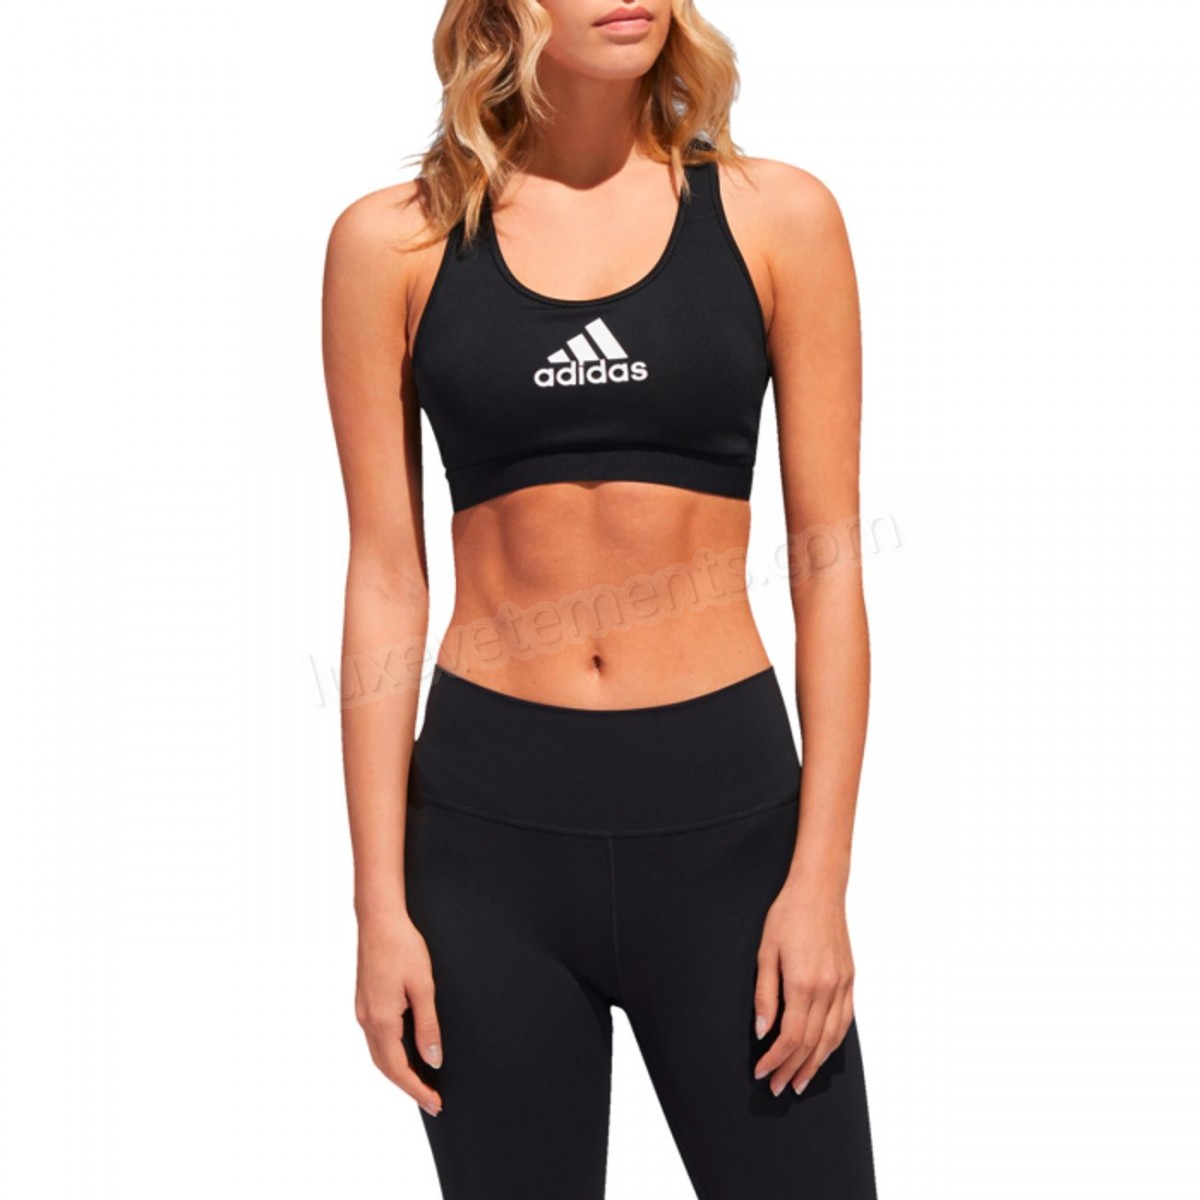 Adidas-DEBARDEUR Fitness femme ADIDAS DRST ASK Vente en ligne - -2